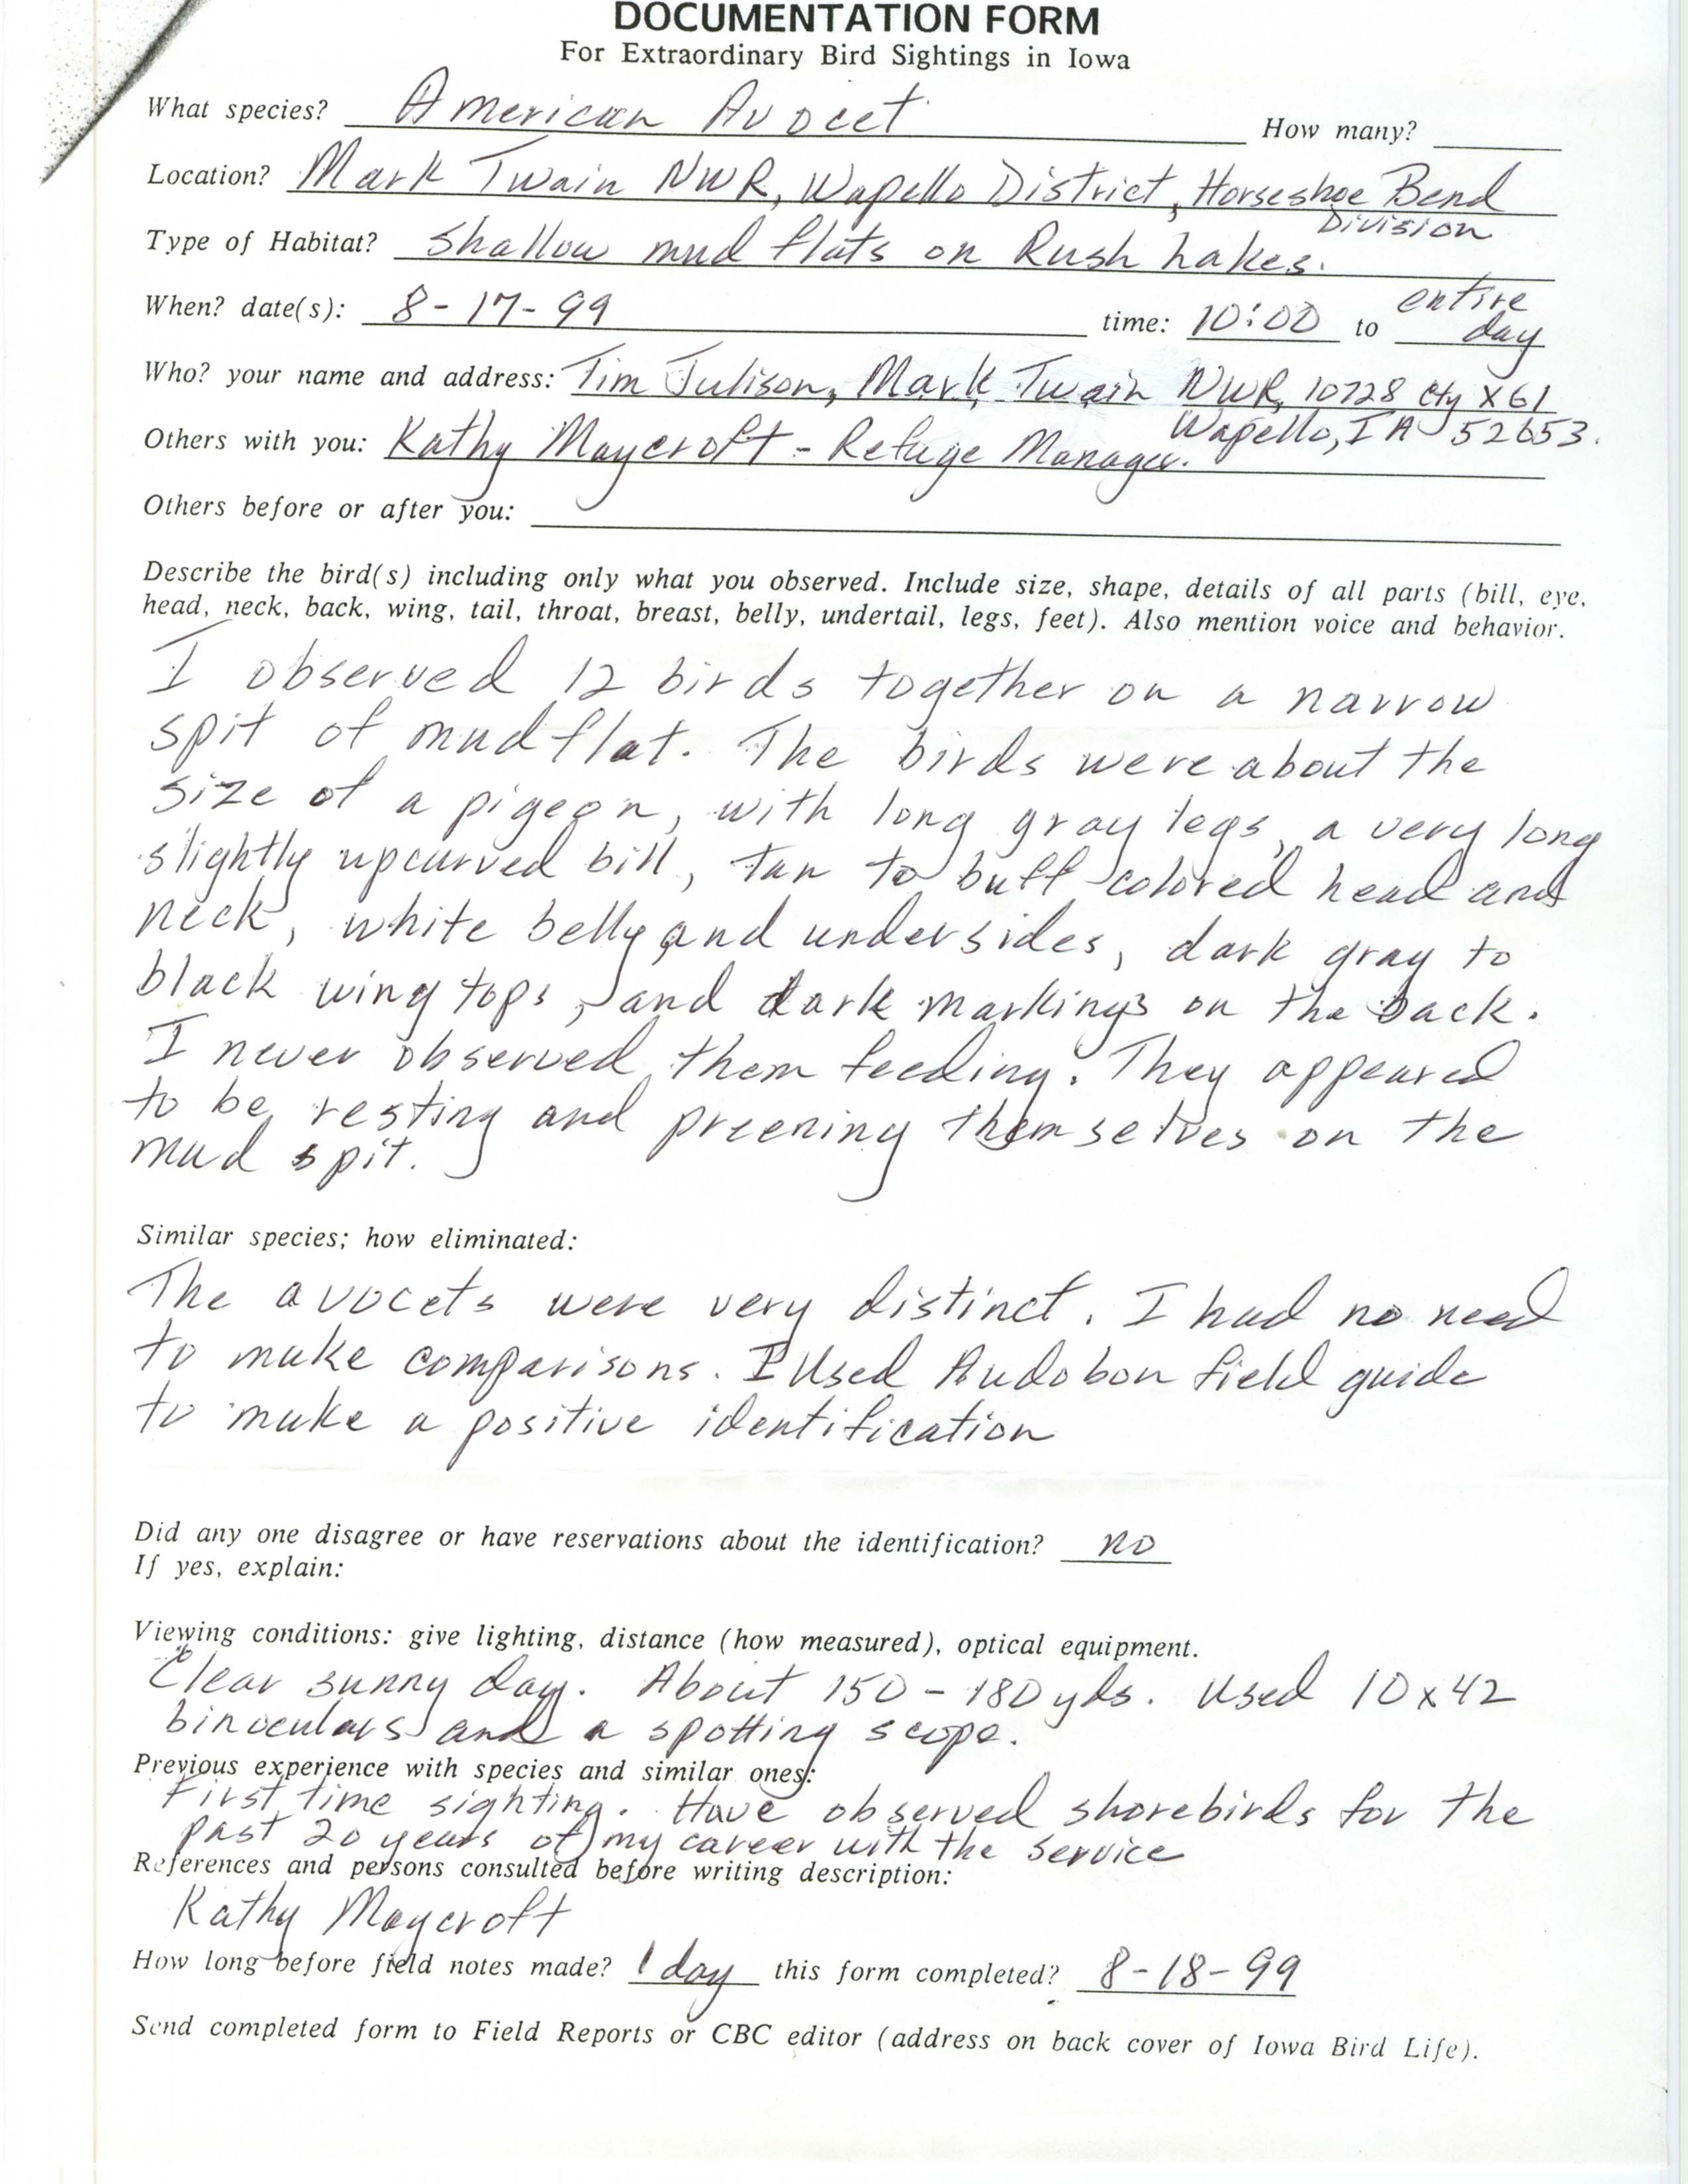 Rare bird documentation form for American Avocet at Mark Twain National Wildlife Refuge, 1999